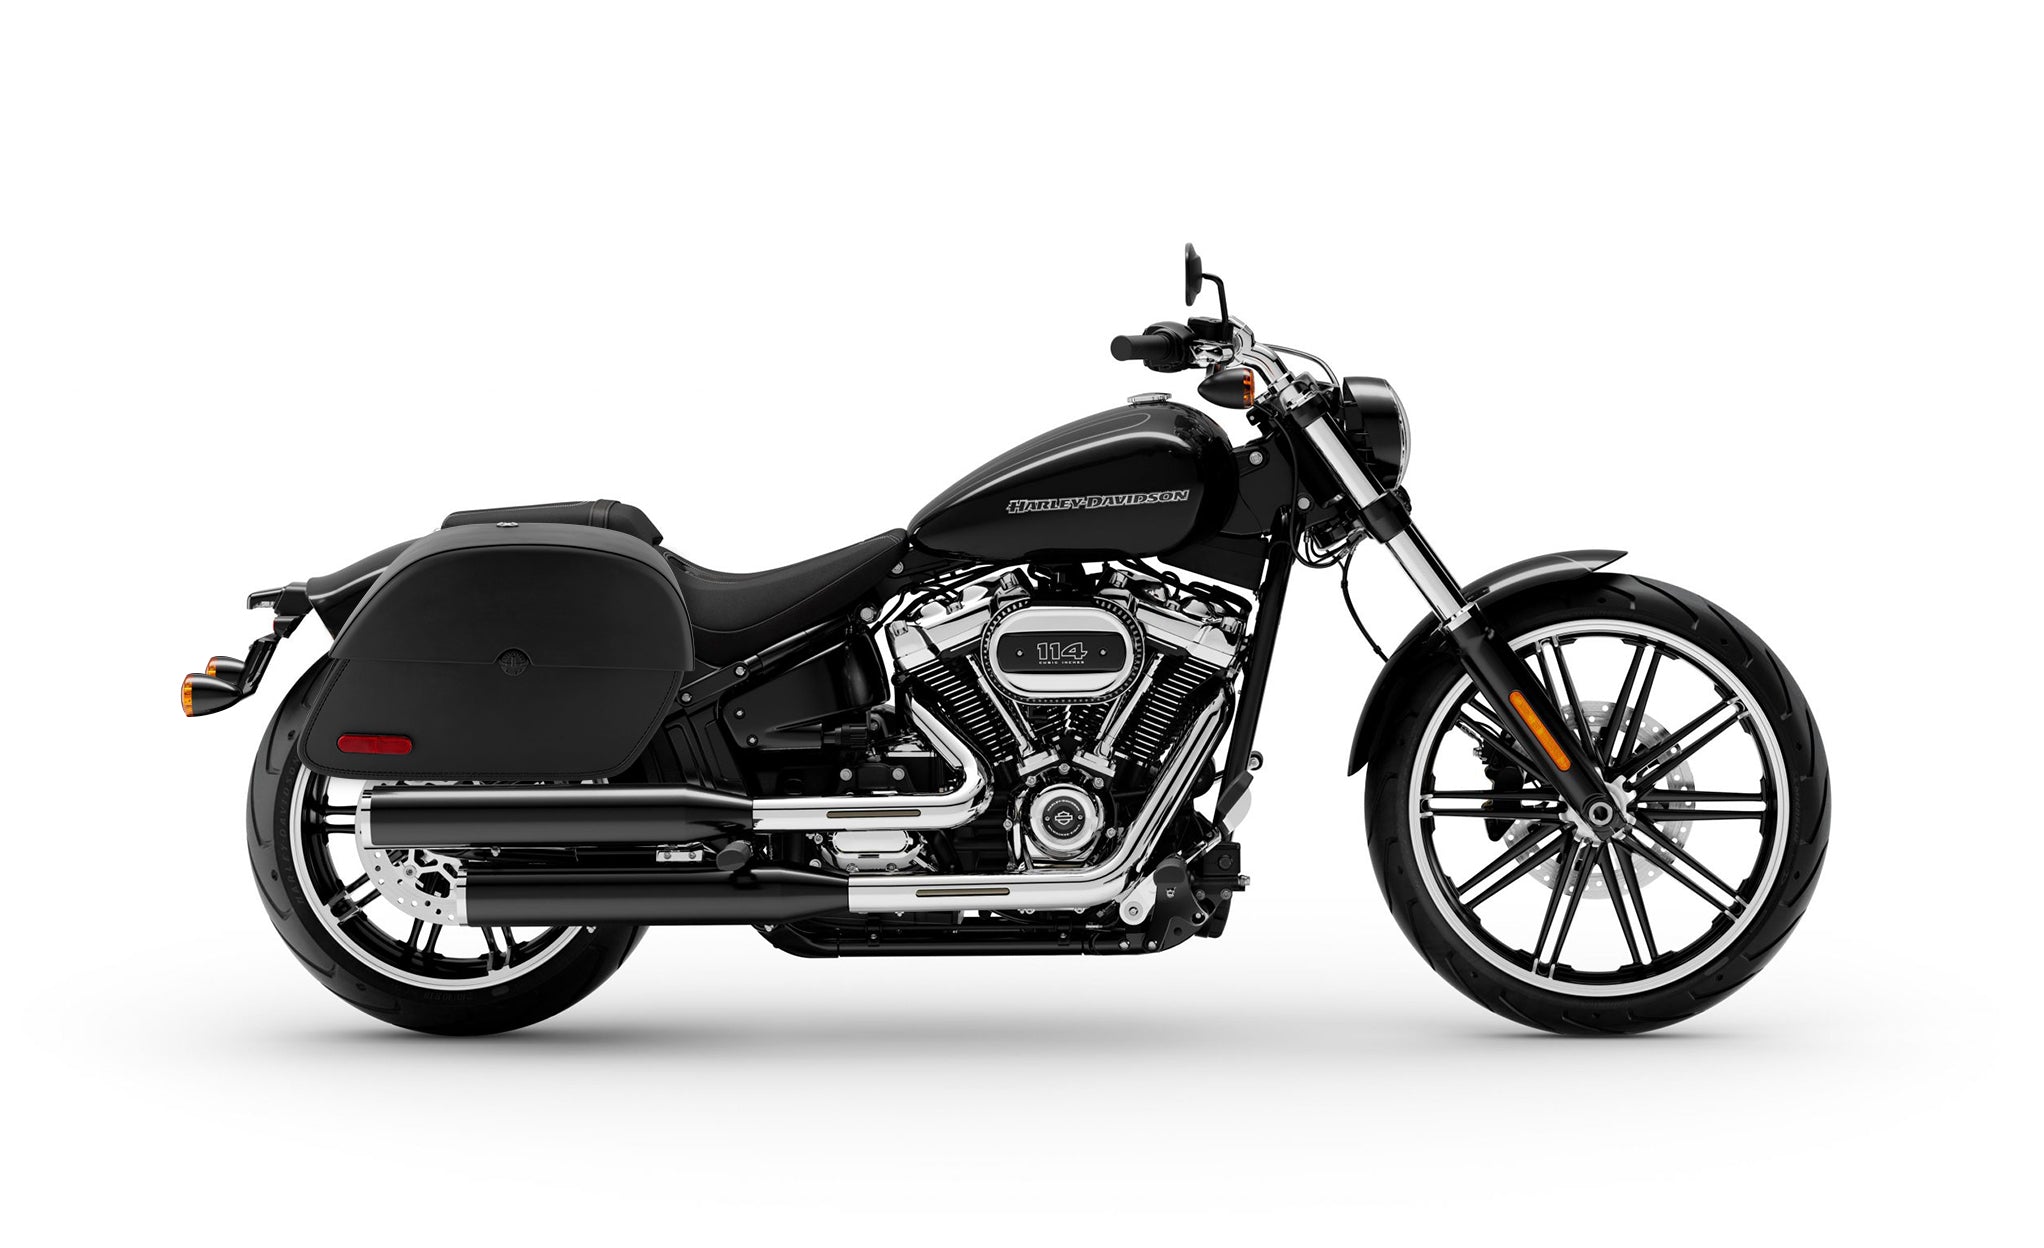 Viking Panzer Large Leather Motorcycle Saddlebags For Harley Davidson Softail Breakout 114 Fxbr S on Bike Photo @expand